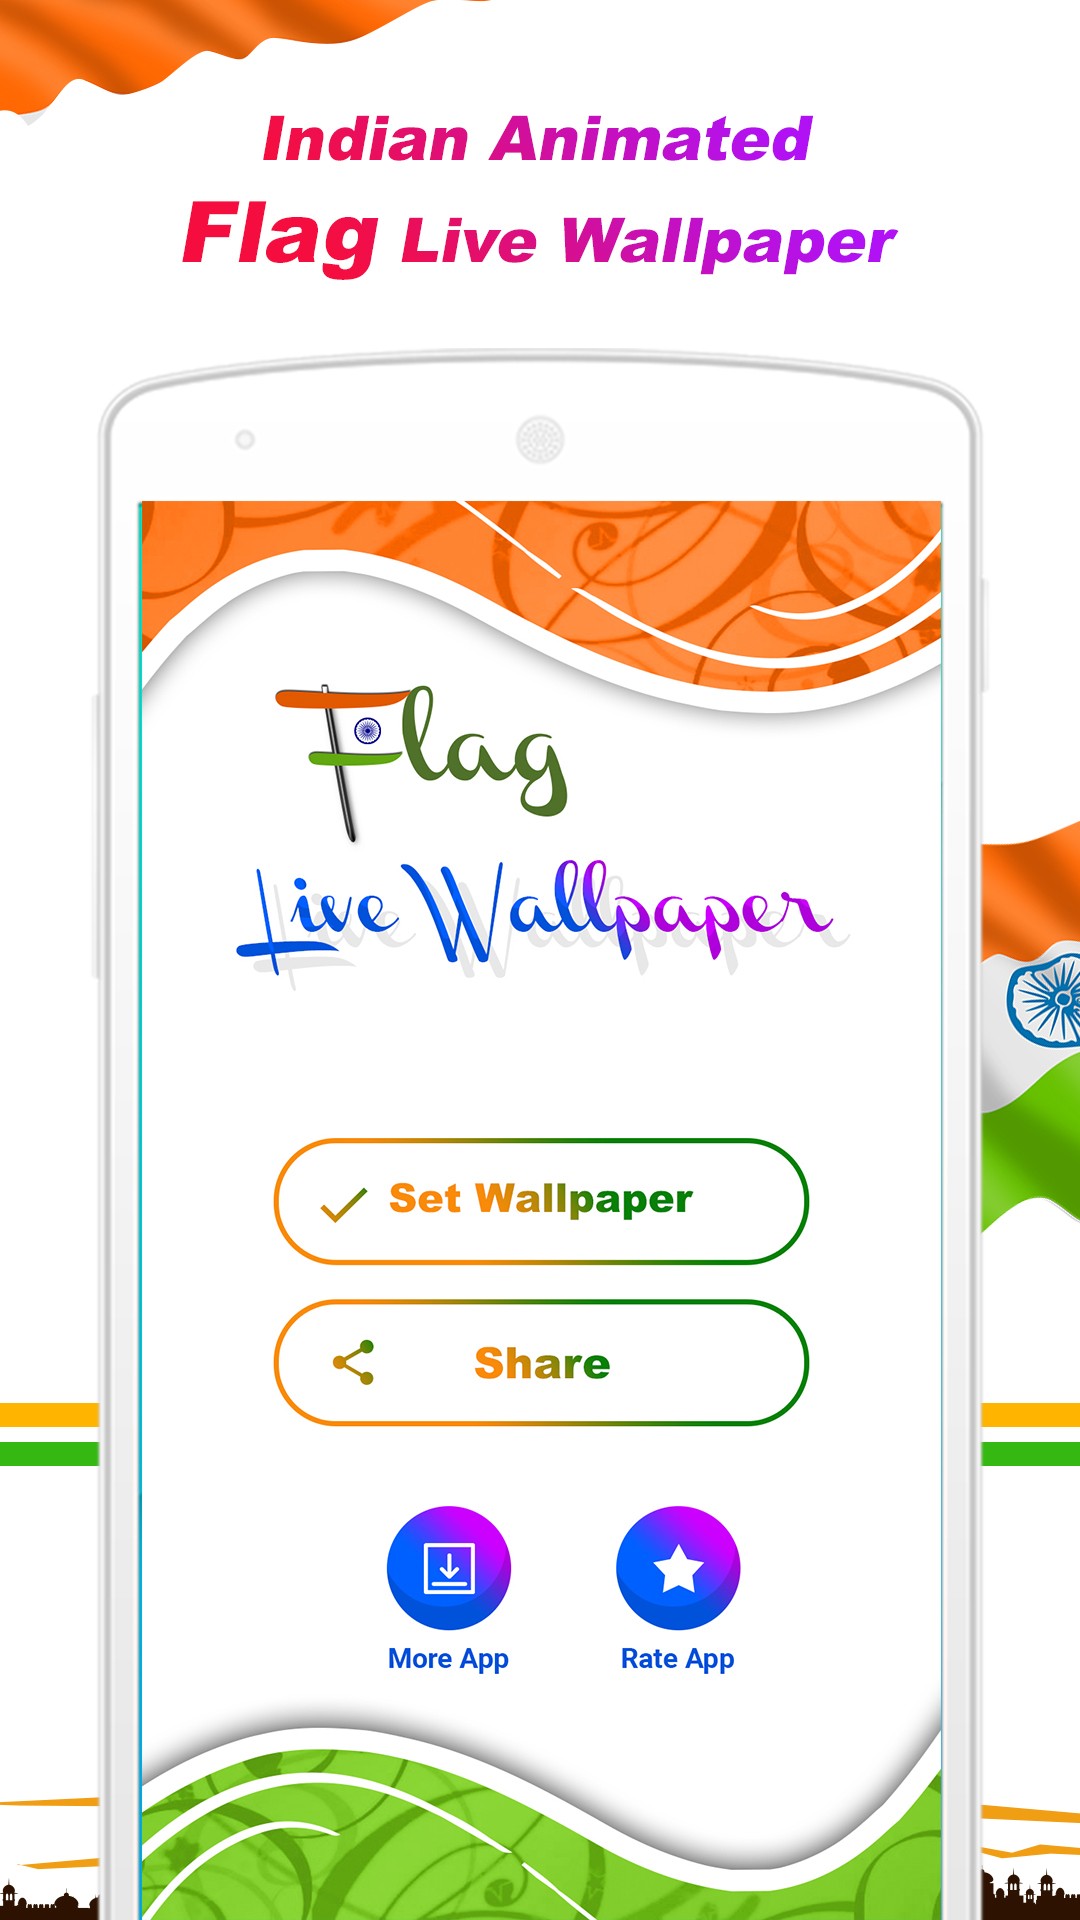 Indian Flag Live Wallpaper - Flag Of India - 1080x1920 Wallpaper 